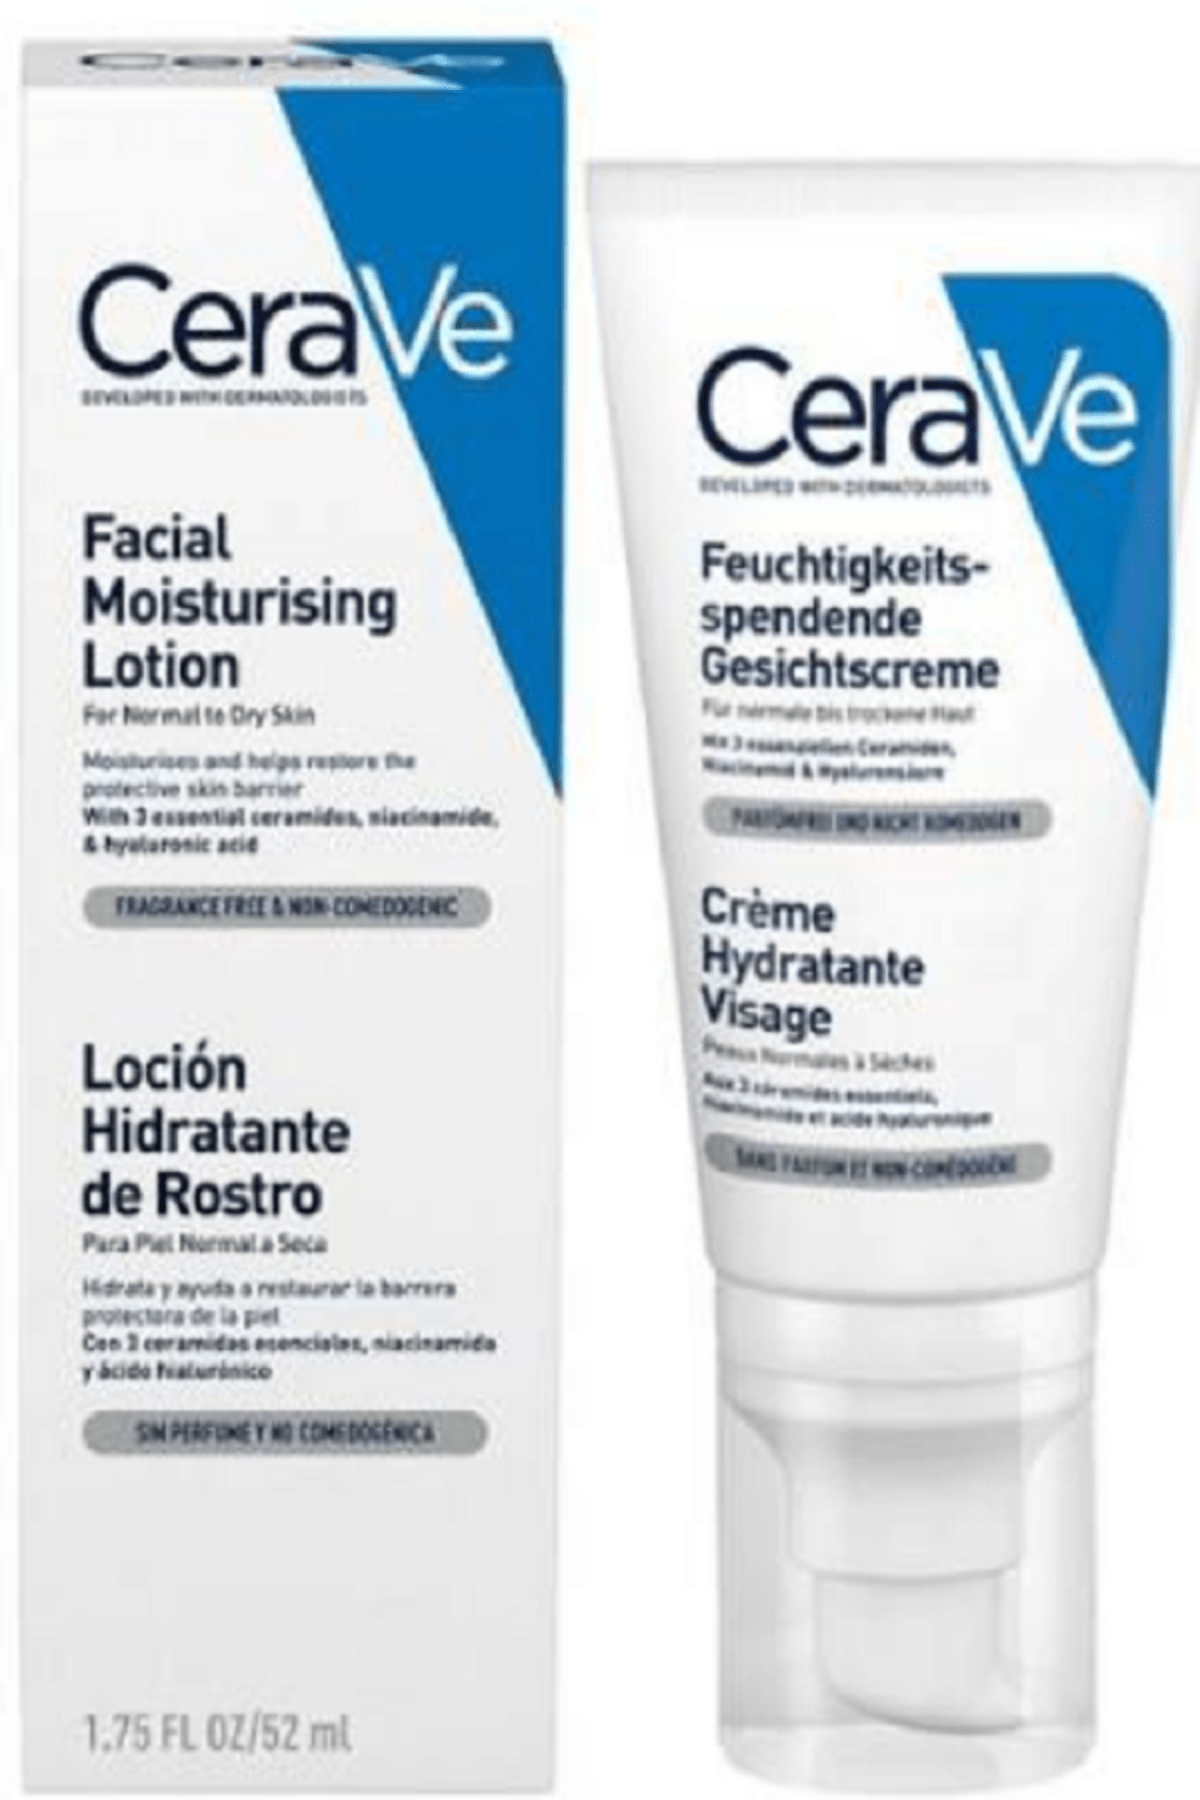 CeraVe Facial Moisturising Lotion Pm 52 ml